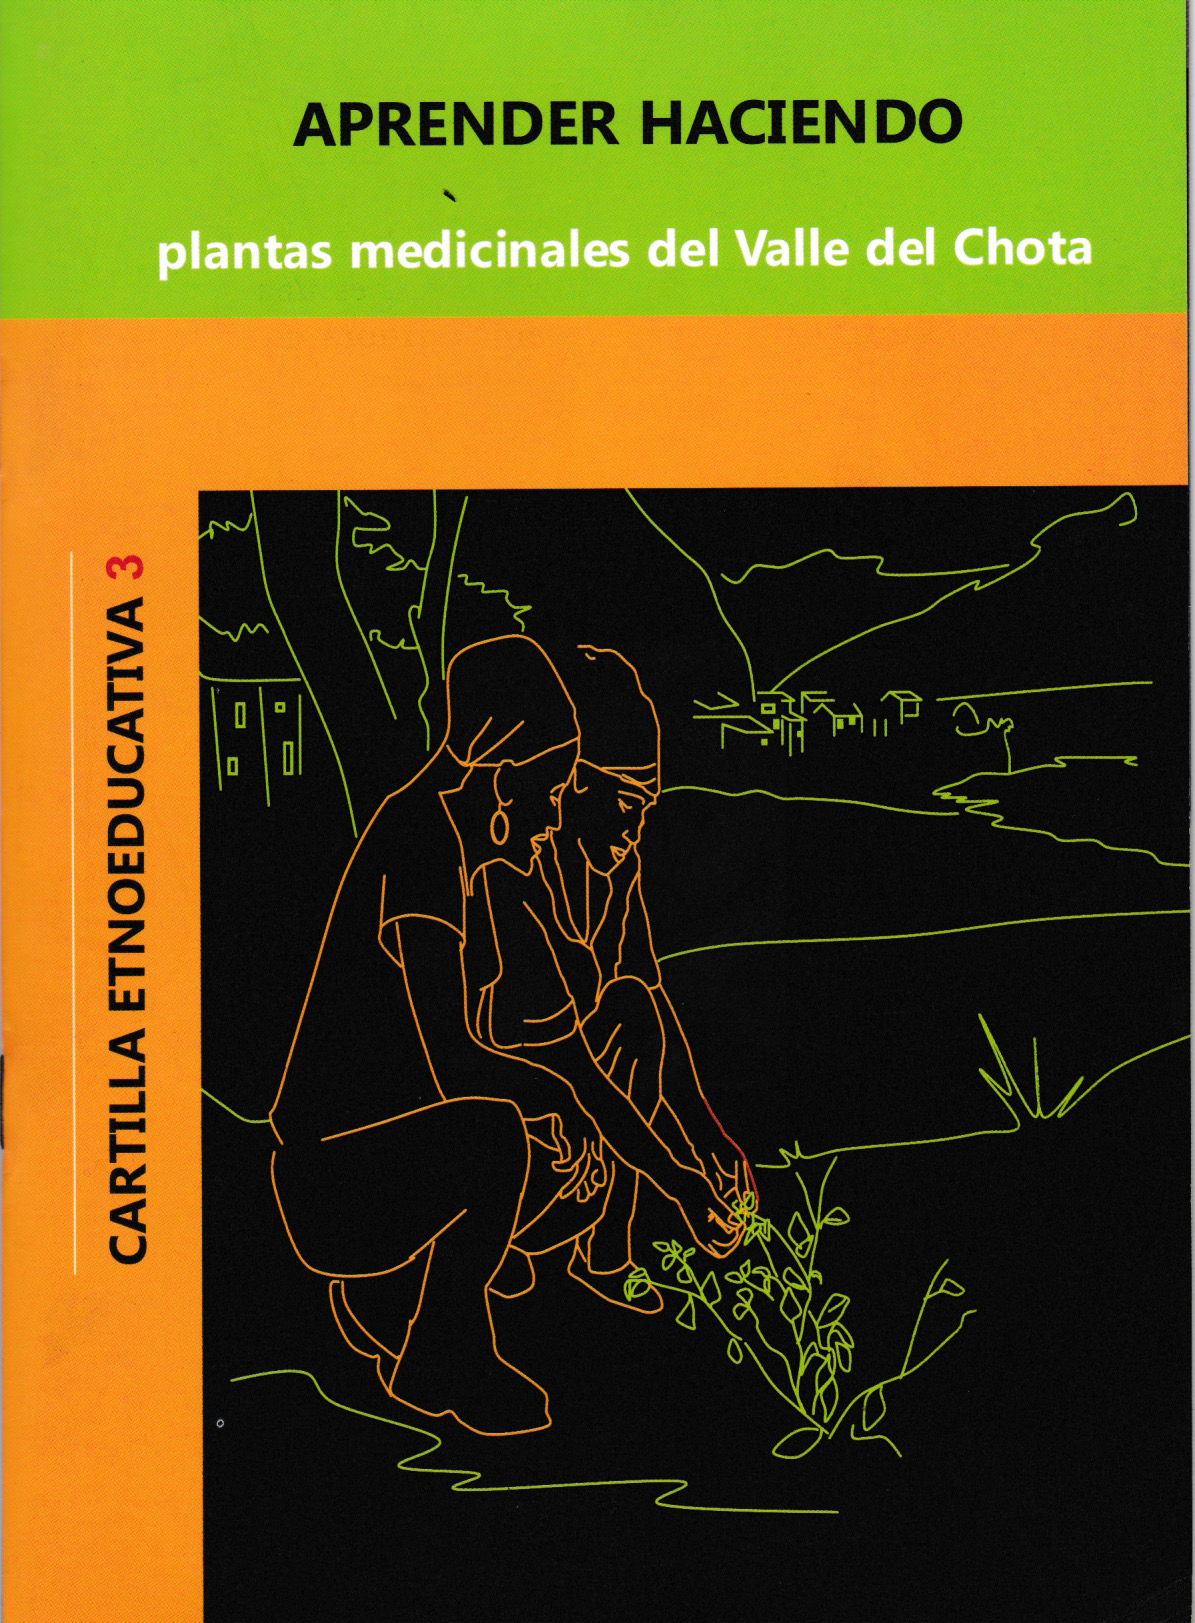 Afro-andean Documentary Fund of the Simón Bolívar Andean University. Publication Cartilla etnoeducativa 3. 